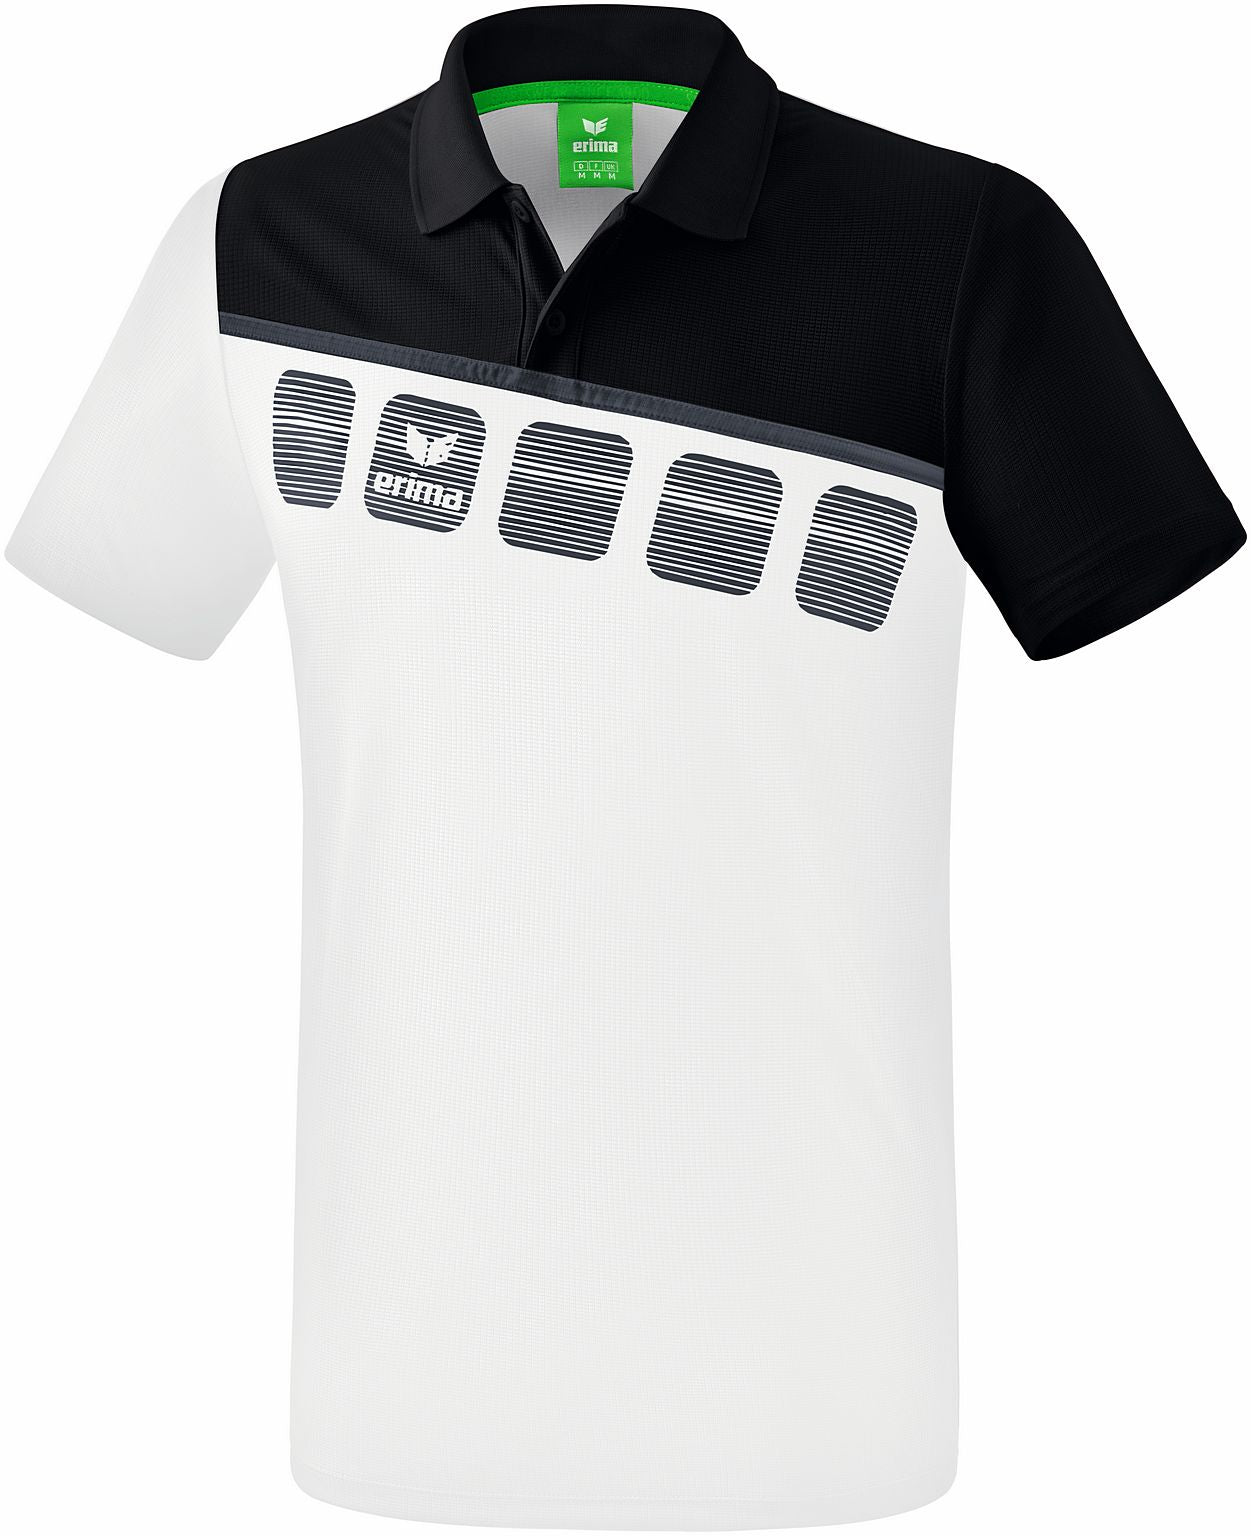 Outlet str. MEDIUM Teamline 5-C polo-shirt